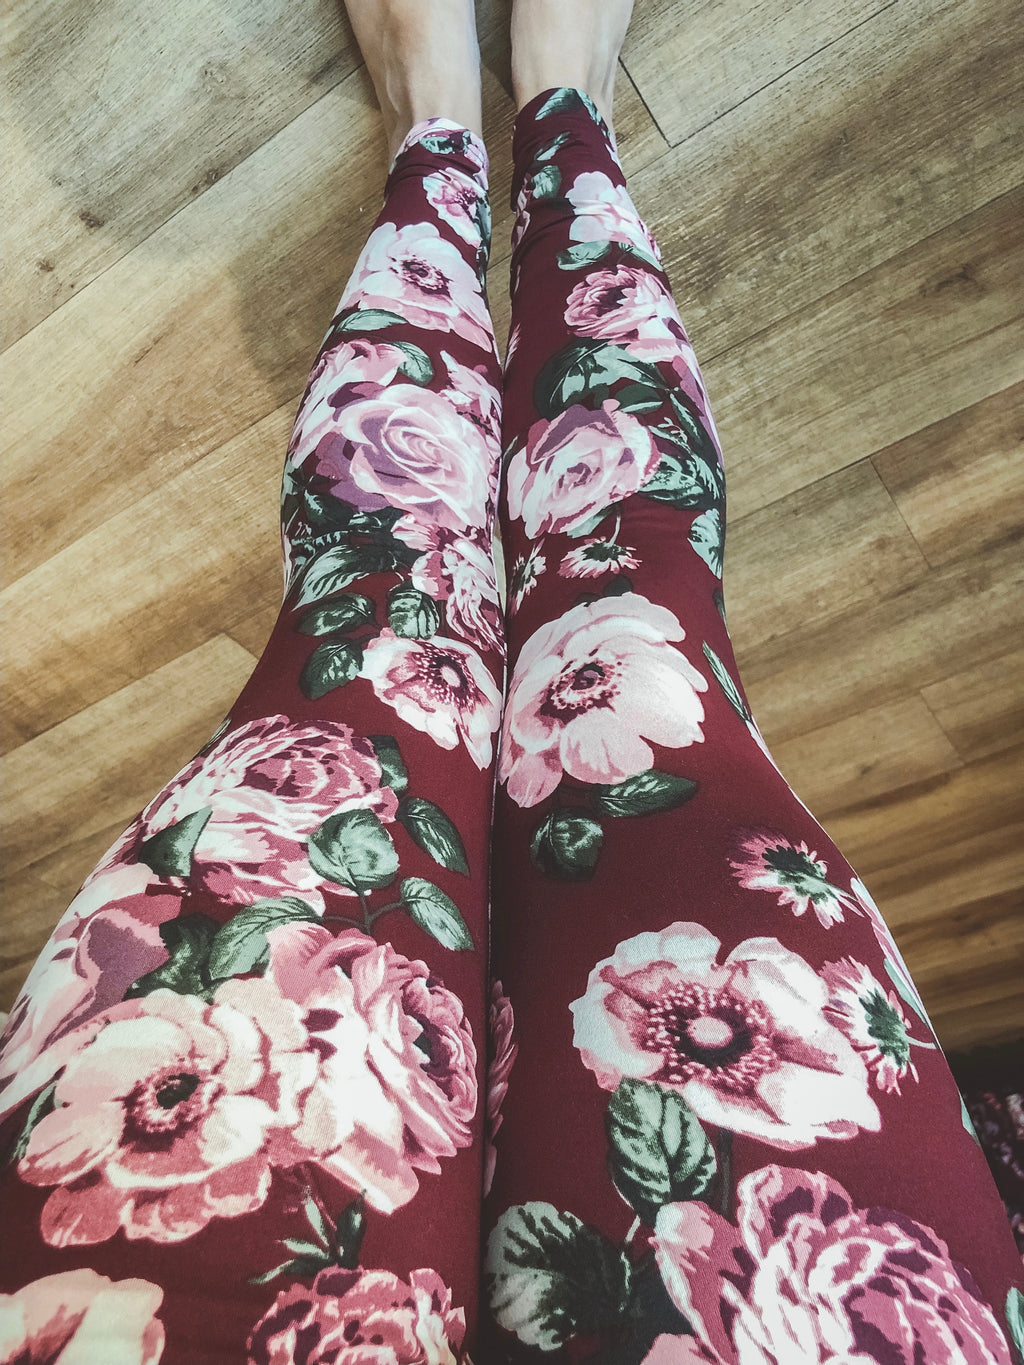 Leggings en "brushed poly" polyester/spandex grosses fleurs roses fond bourgogne - Fait par une maman